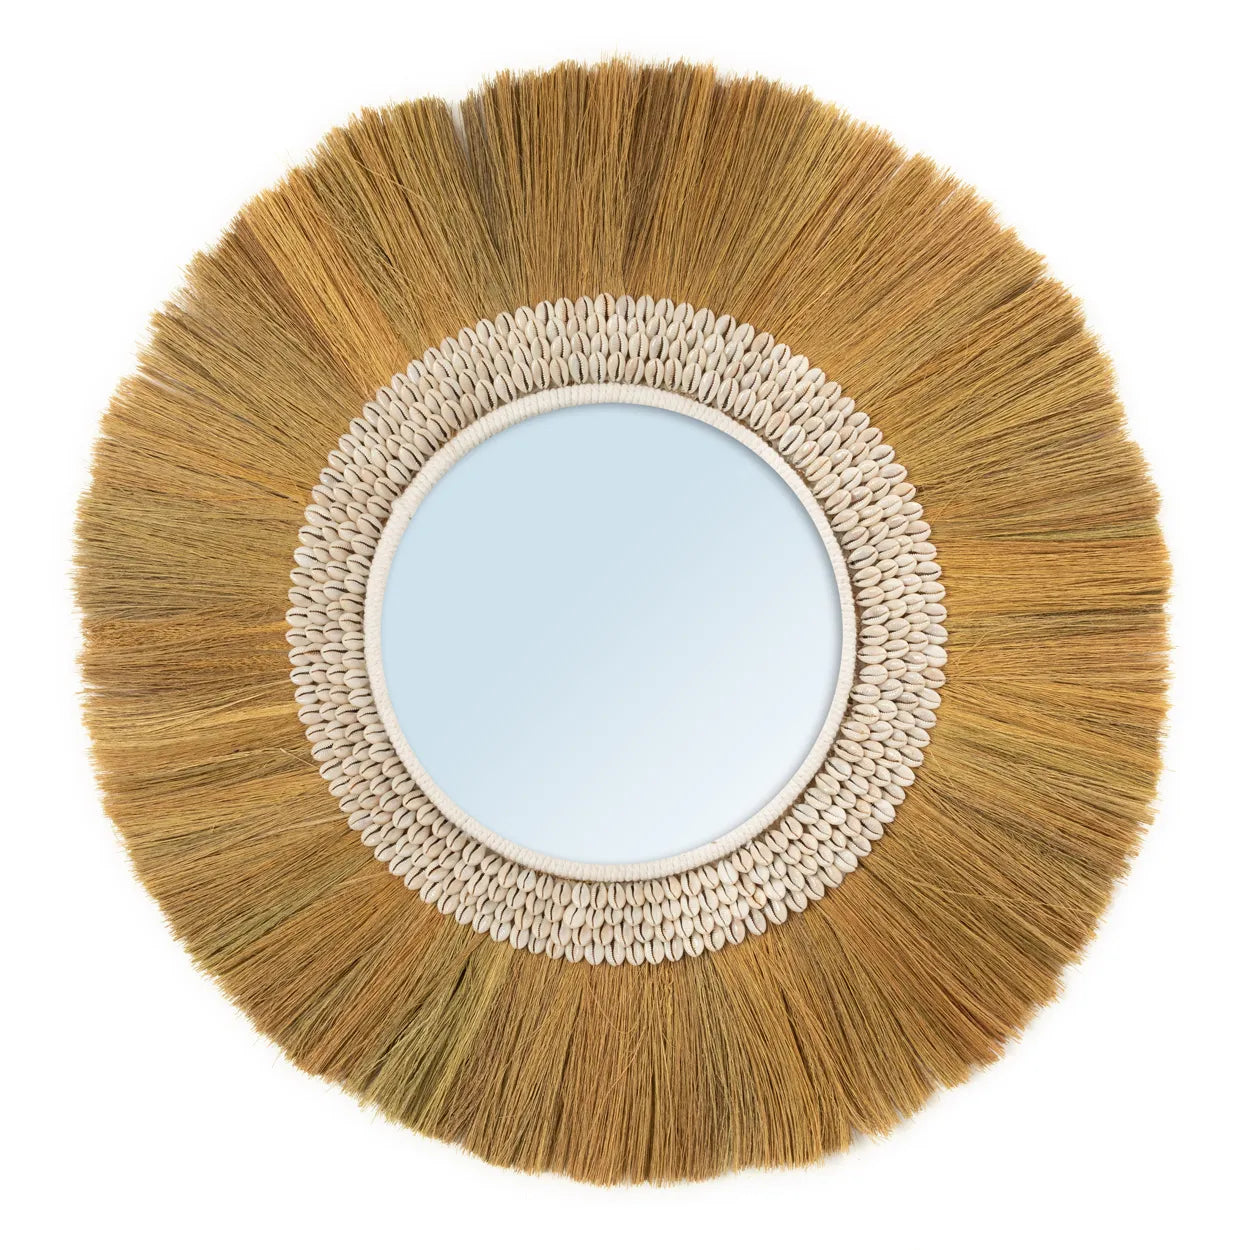 Canary Islands Seashell Mirror - Cowrie Shell Mirror